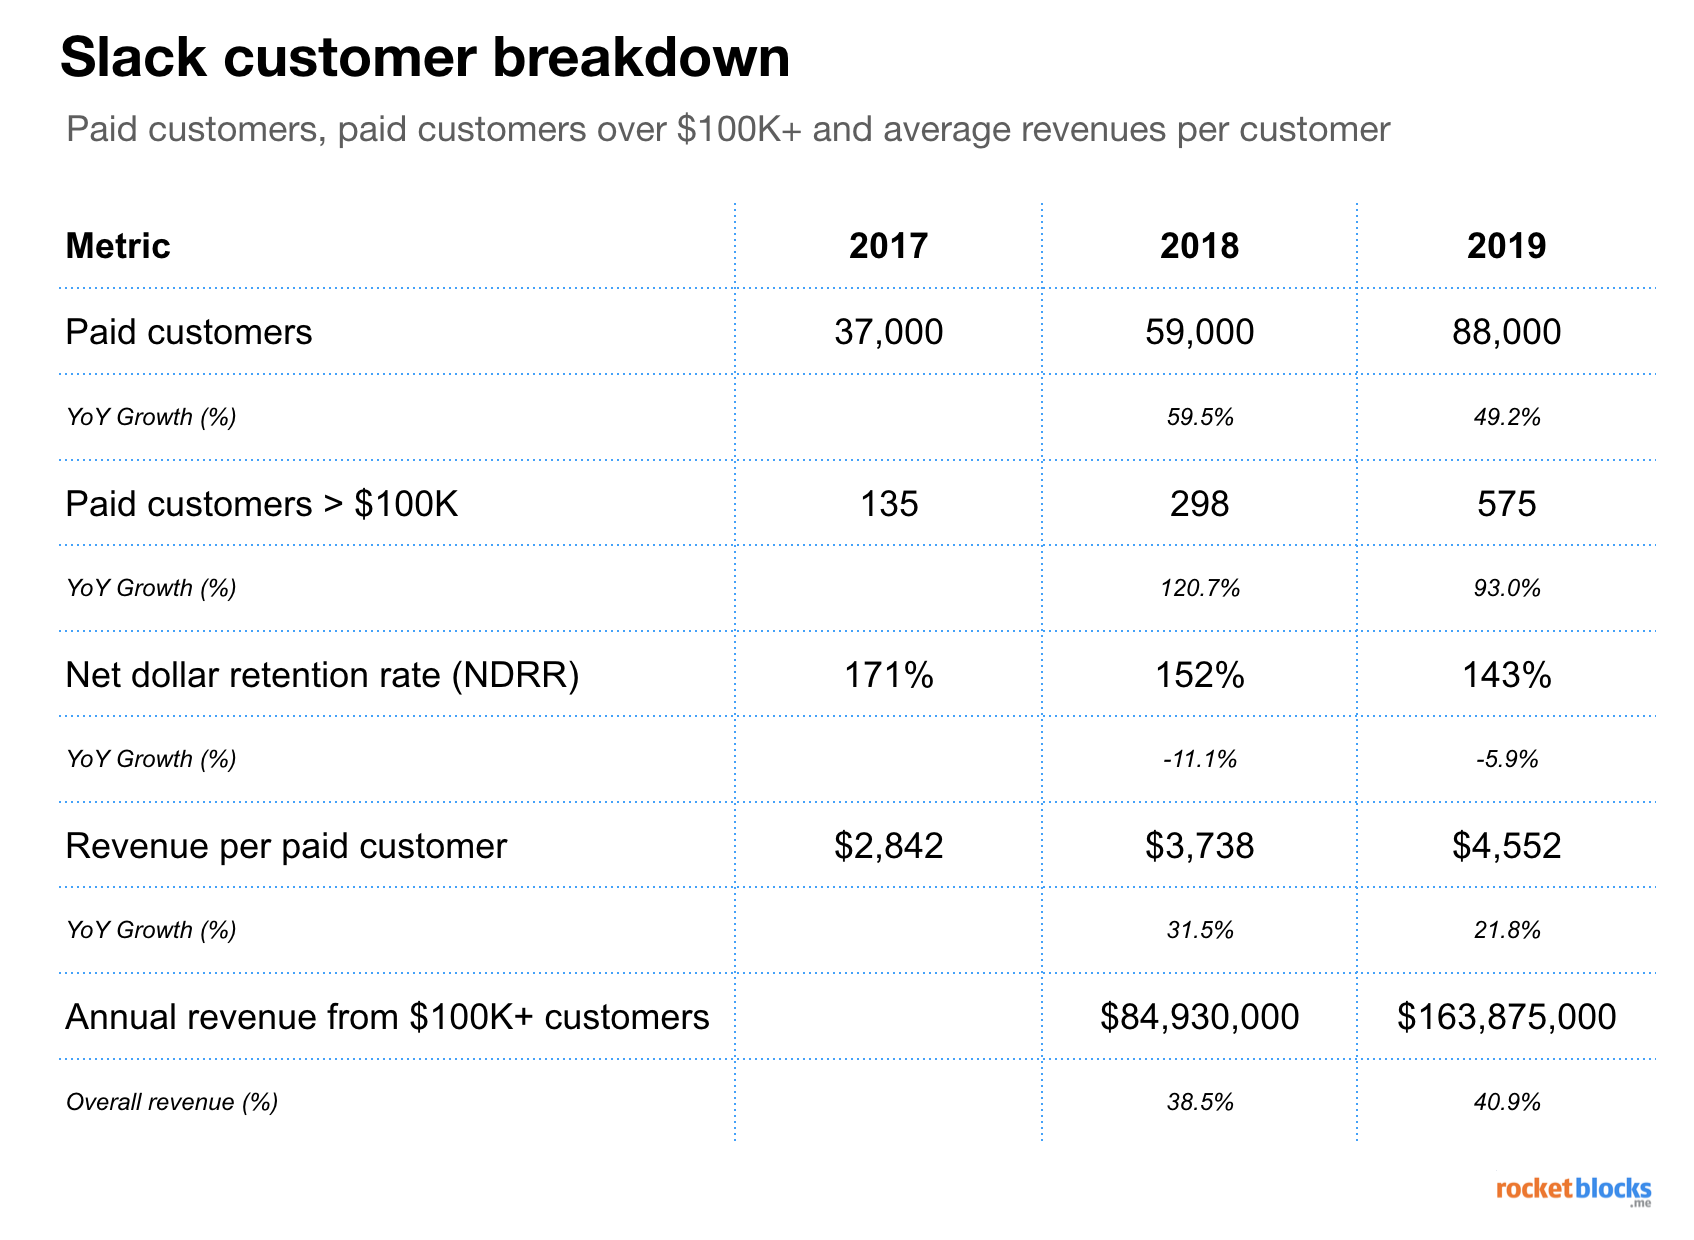 Slack's customer type breakdown, paid vs. paid $100K+